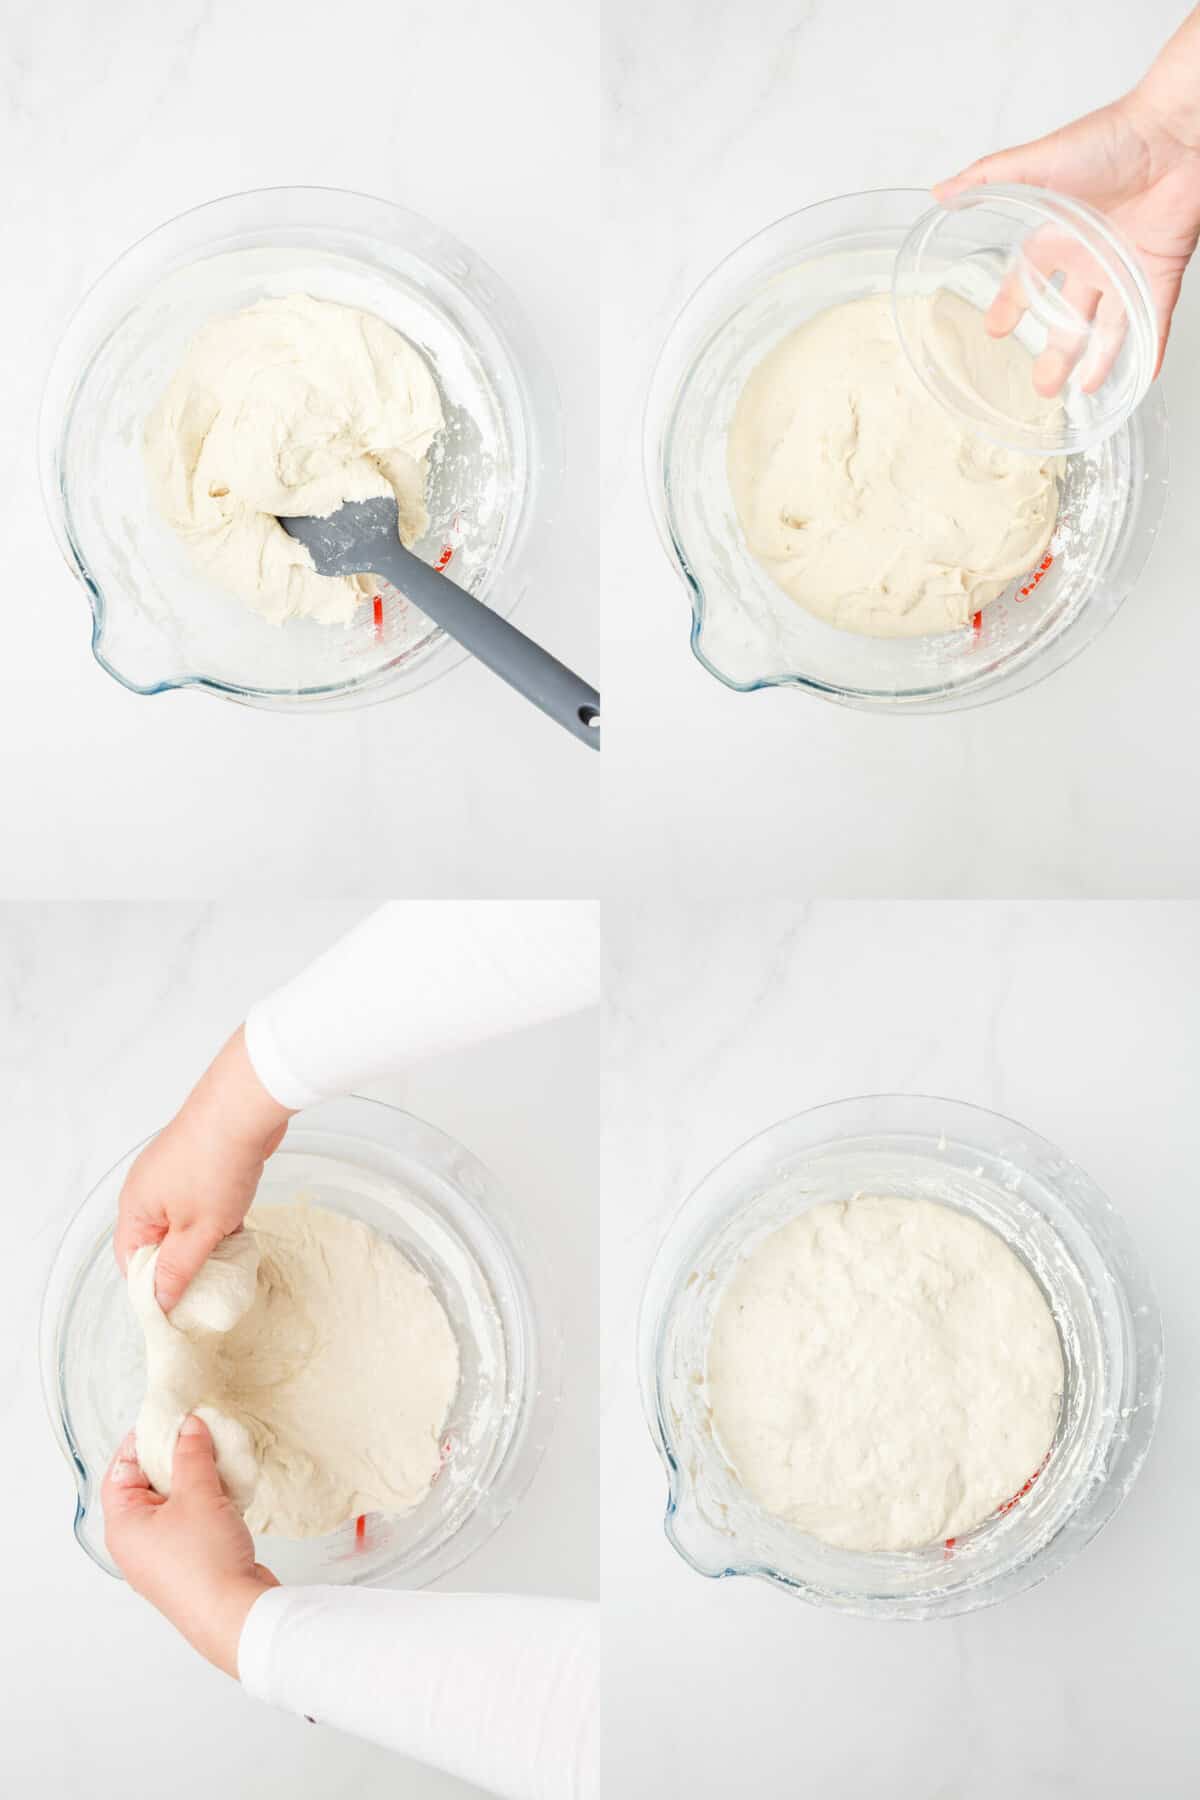 steps 1-4 to make sourdough bread